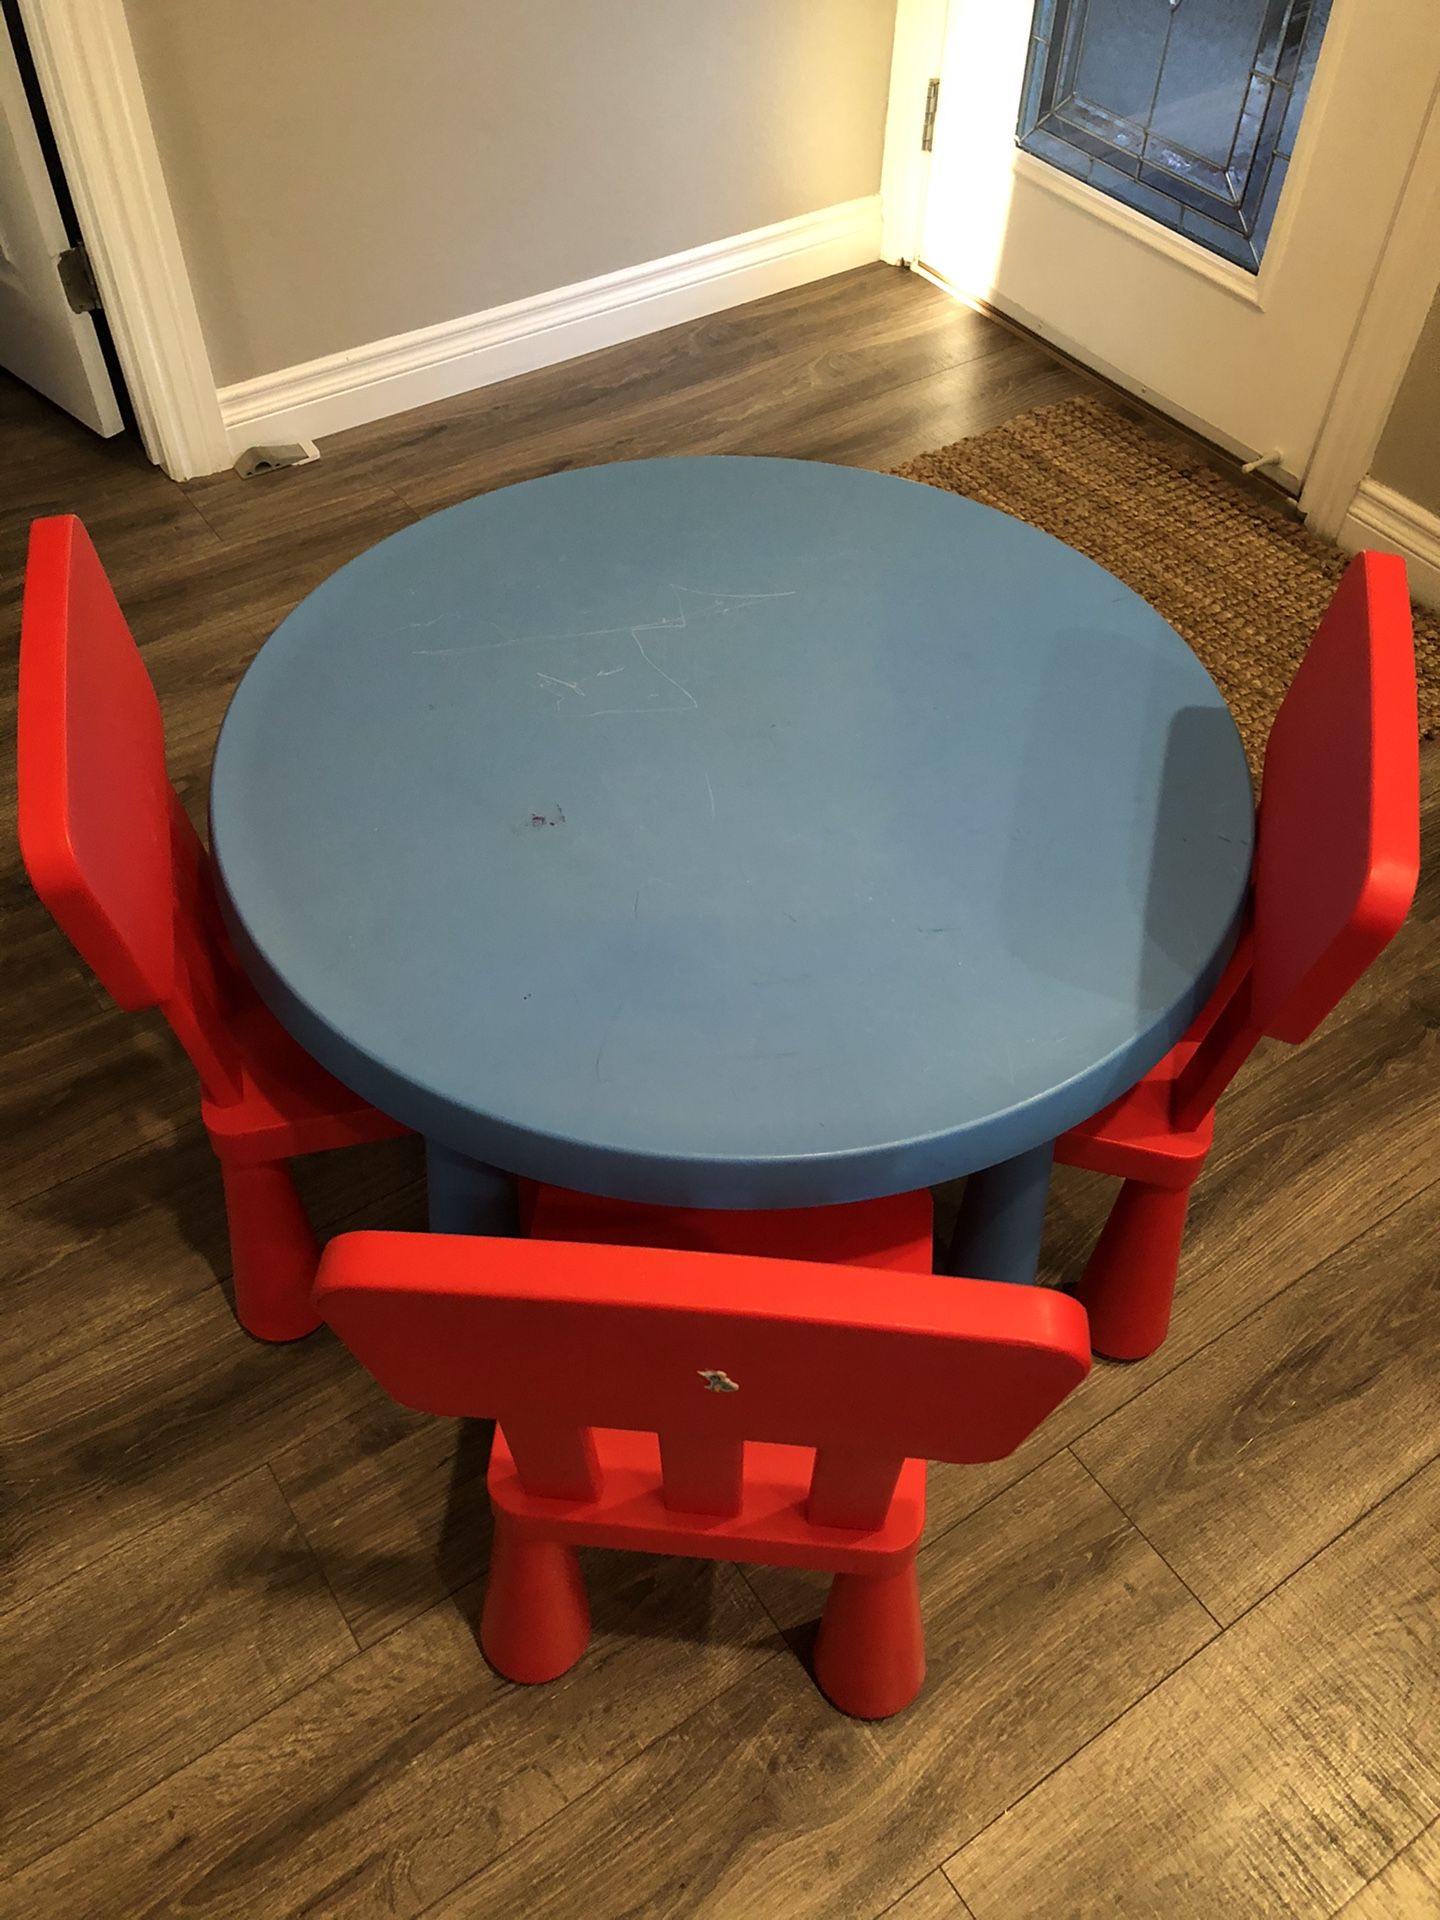 IKEA kids chairs & table